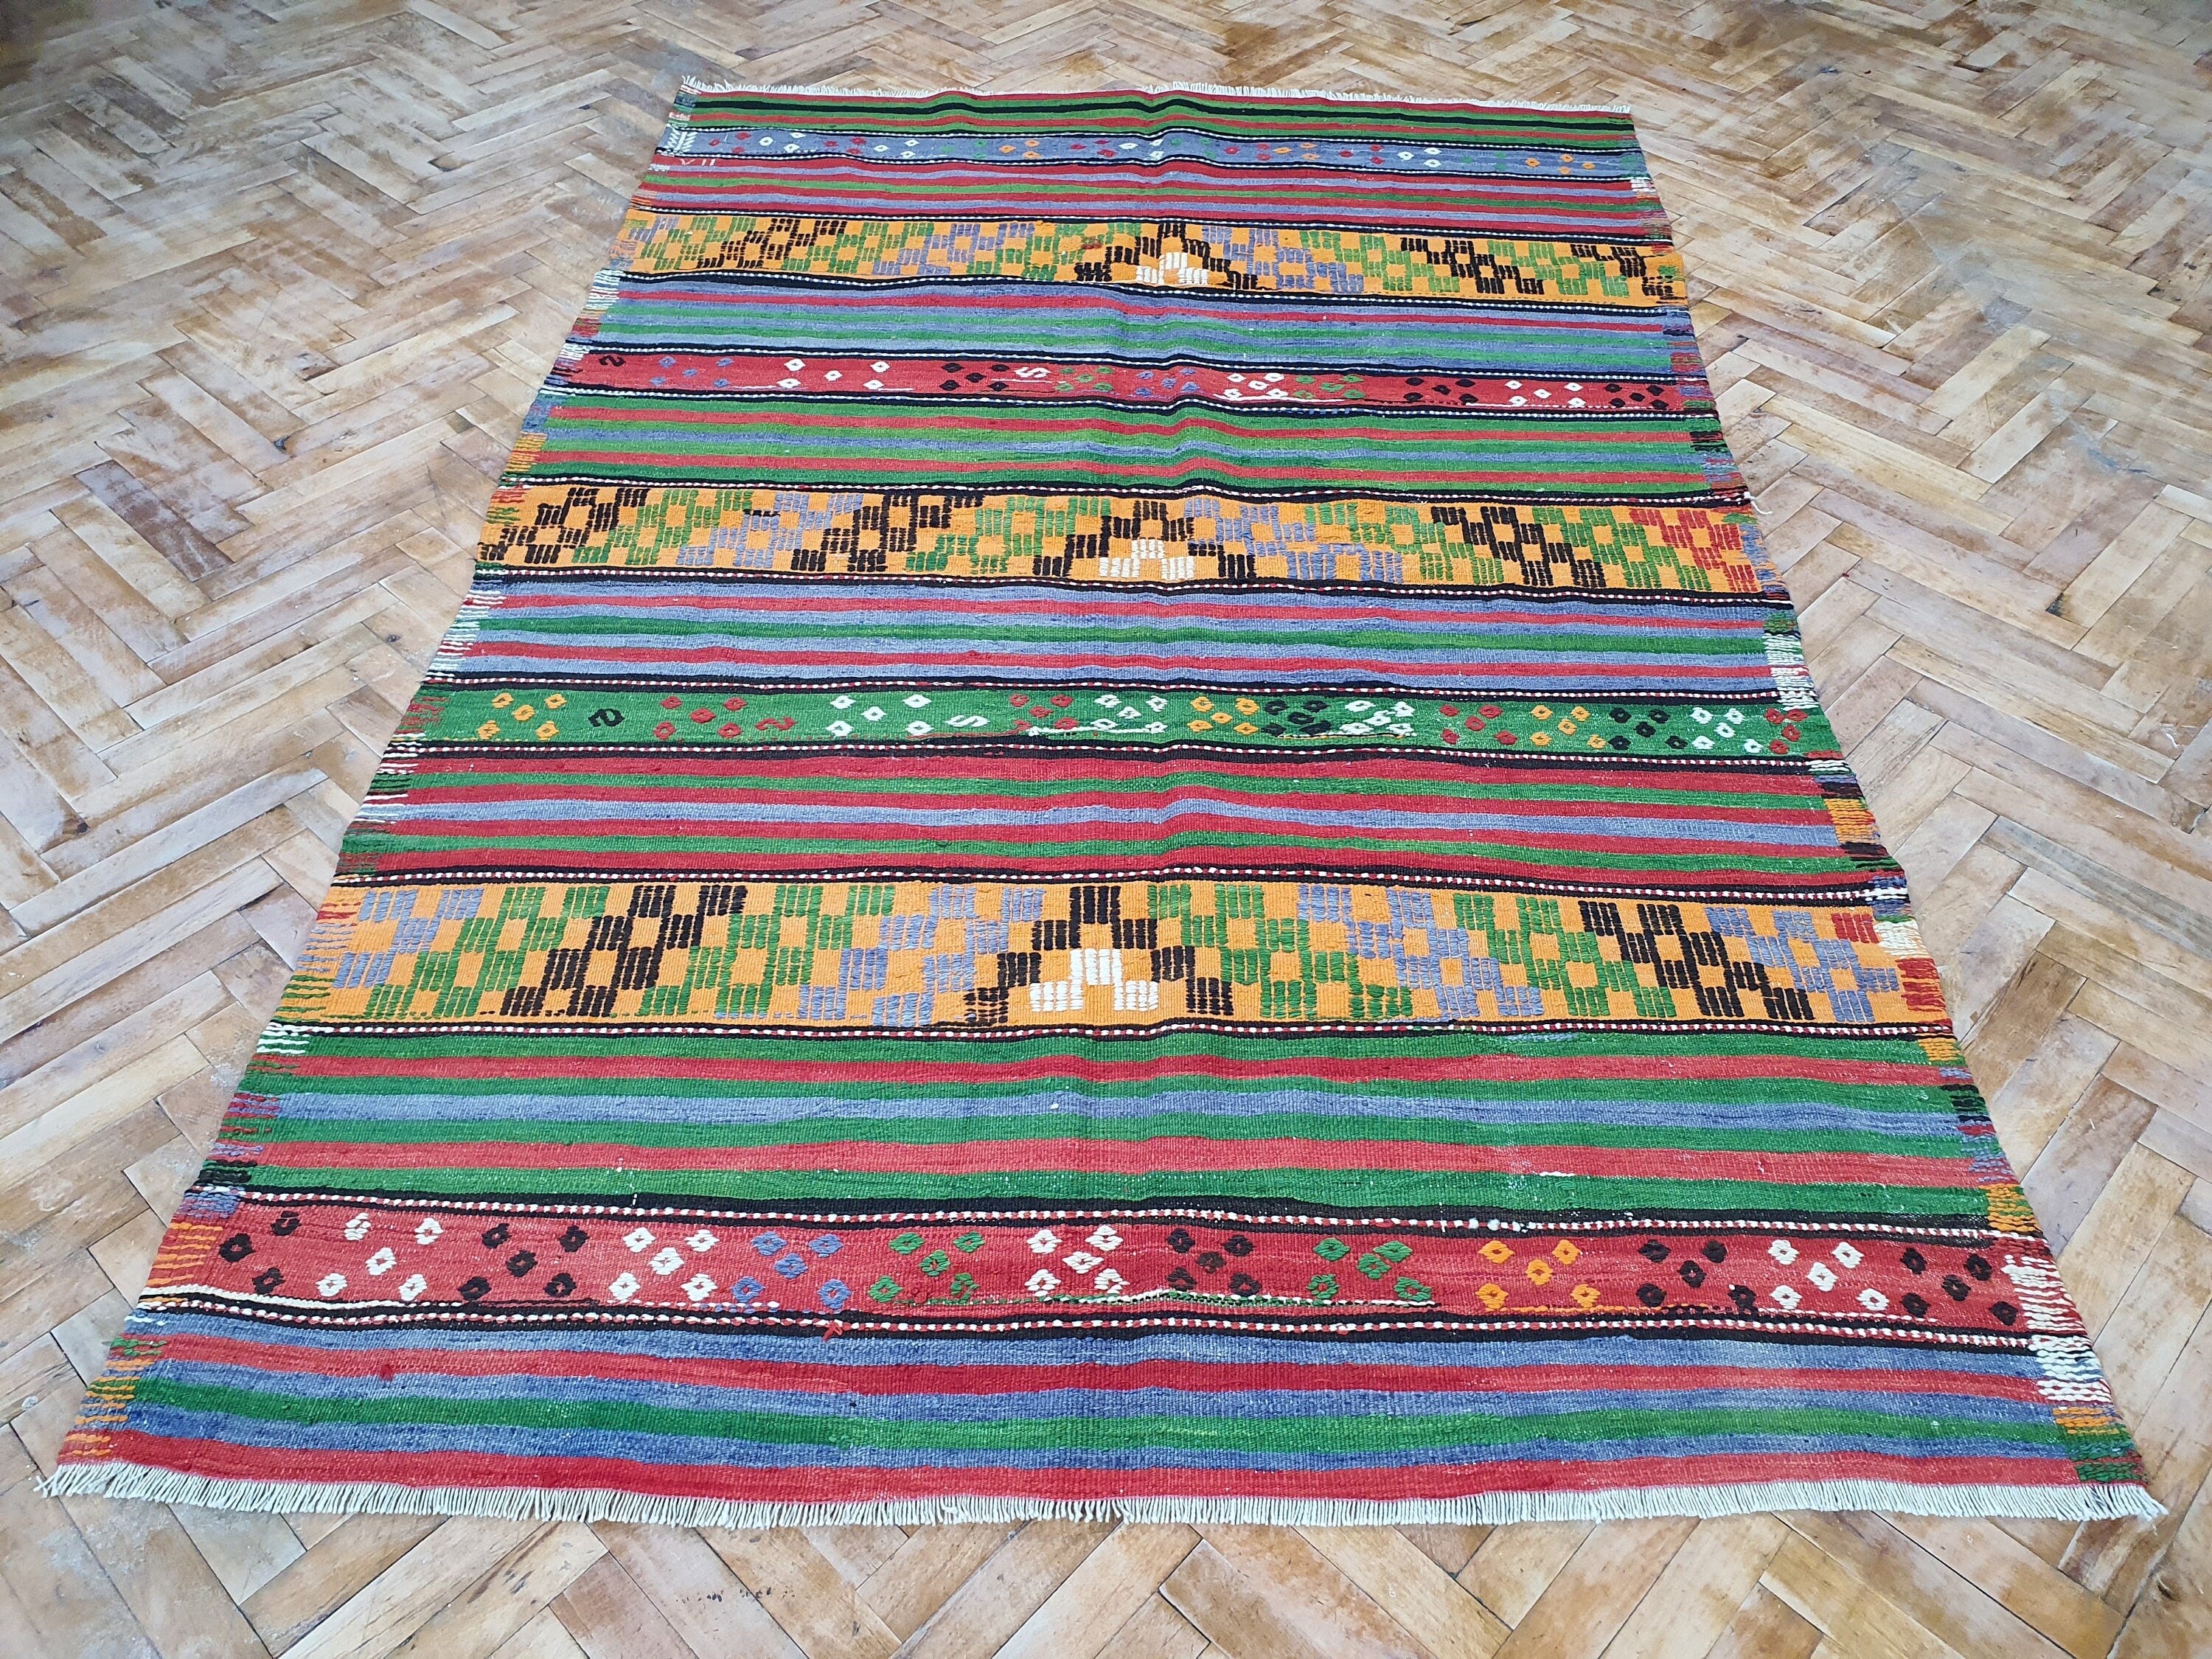 Vintage Decor Persian Area Kilim Living Room, Moroccan Style Handwoven Wool Rug, Bohemian Decor Rustic Rug, Colorful Turkish Rug 7'9''x'5'ft